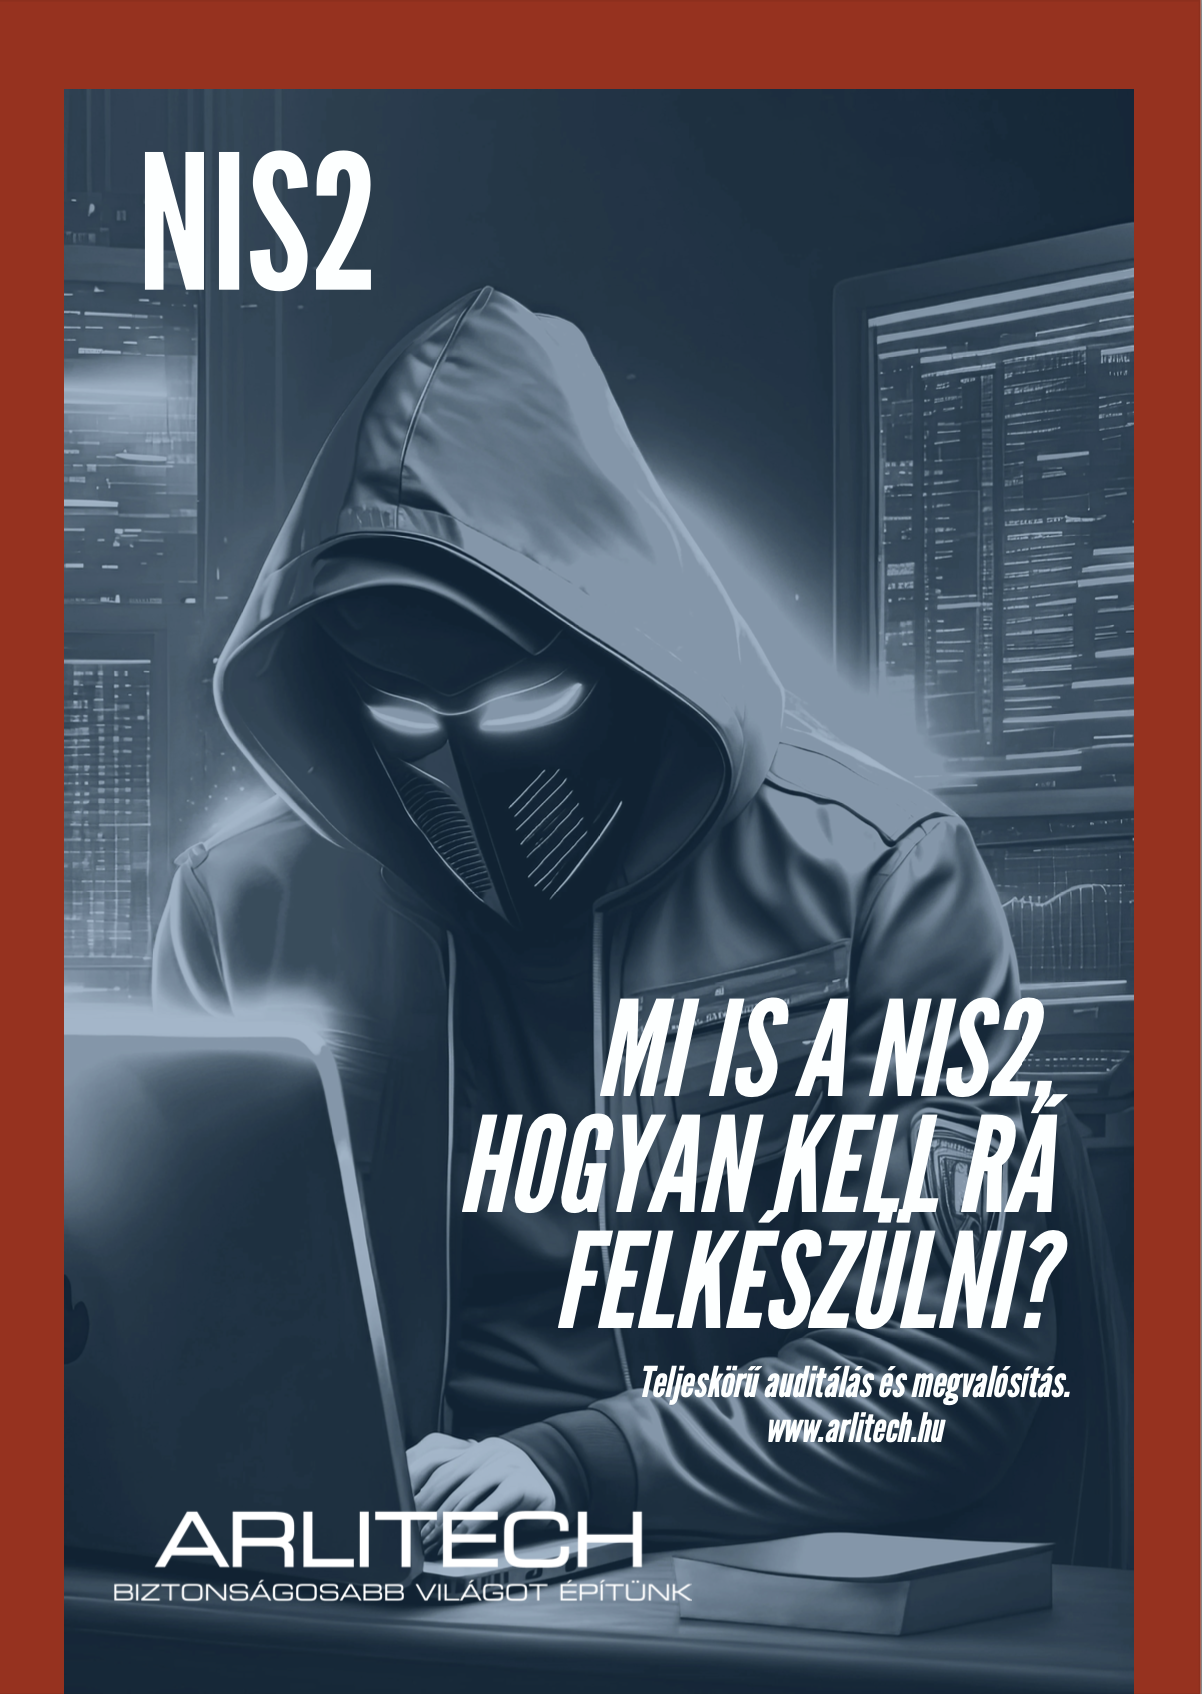 NIS2, mi is az?